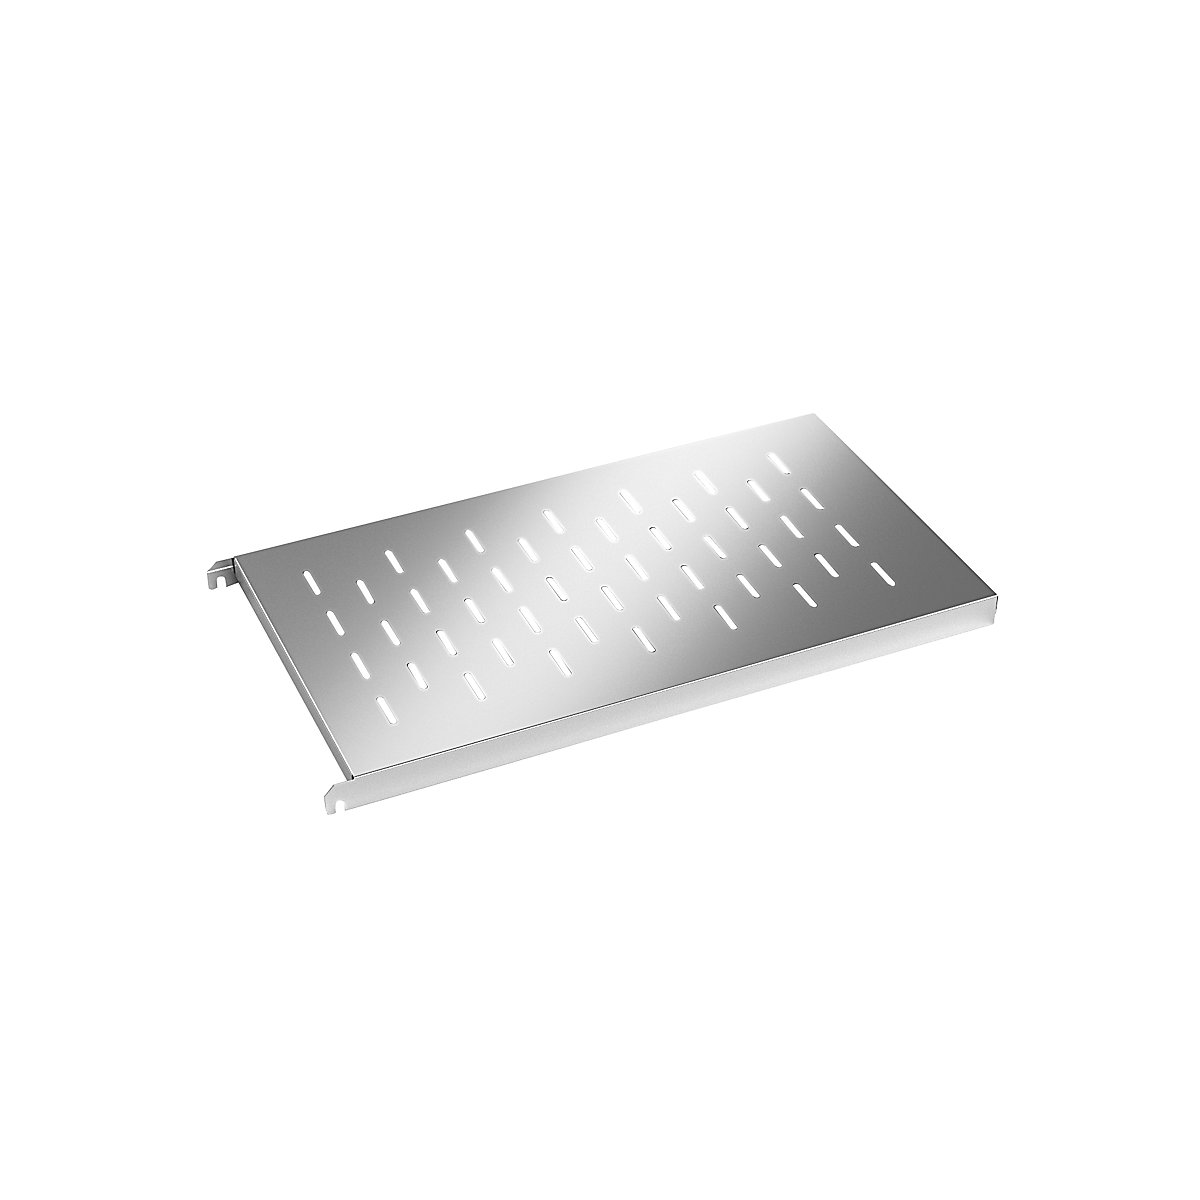 Stainless steel shelf, perforated corner shelf, WxD 740 x 440 mm